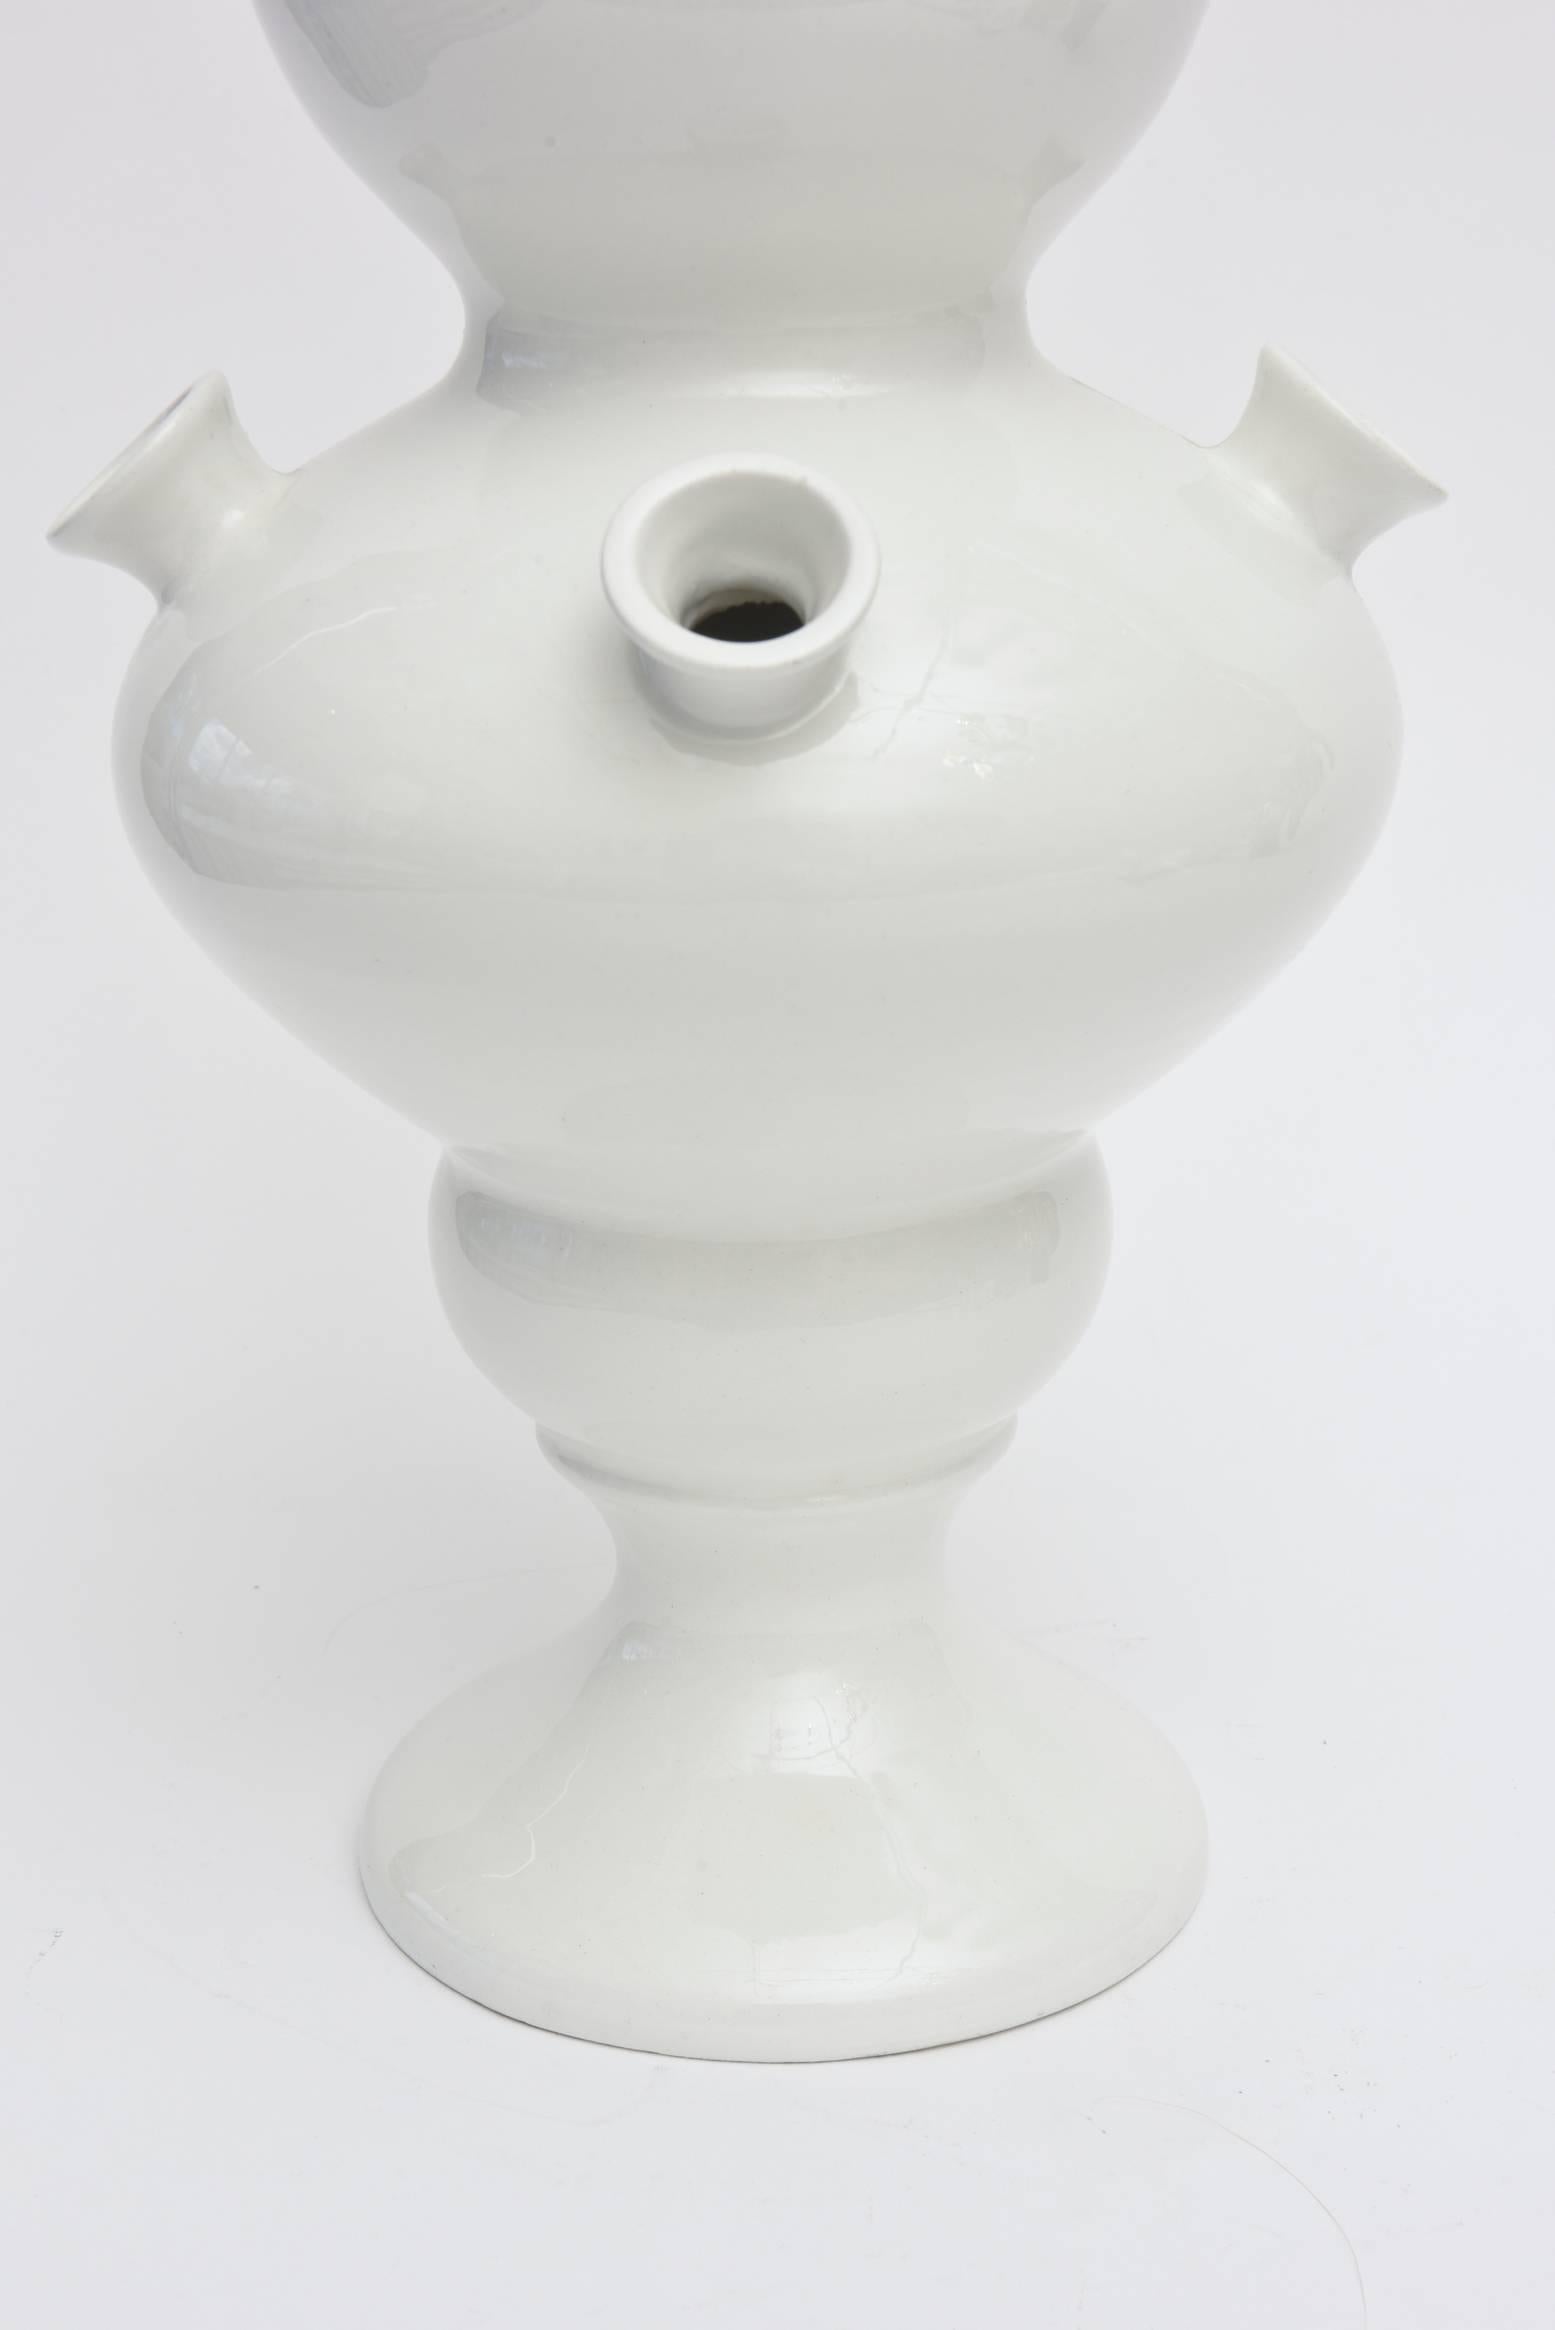 Sculptural Sensual Italian Ceramic Vessel, Vase or Object 3